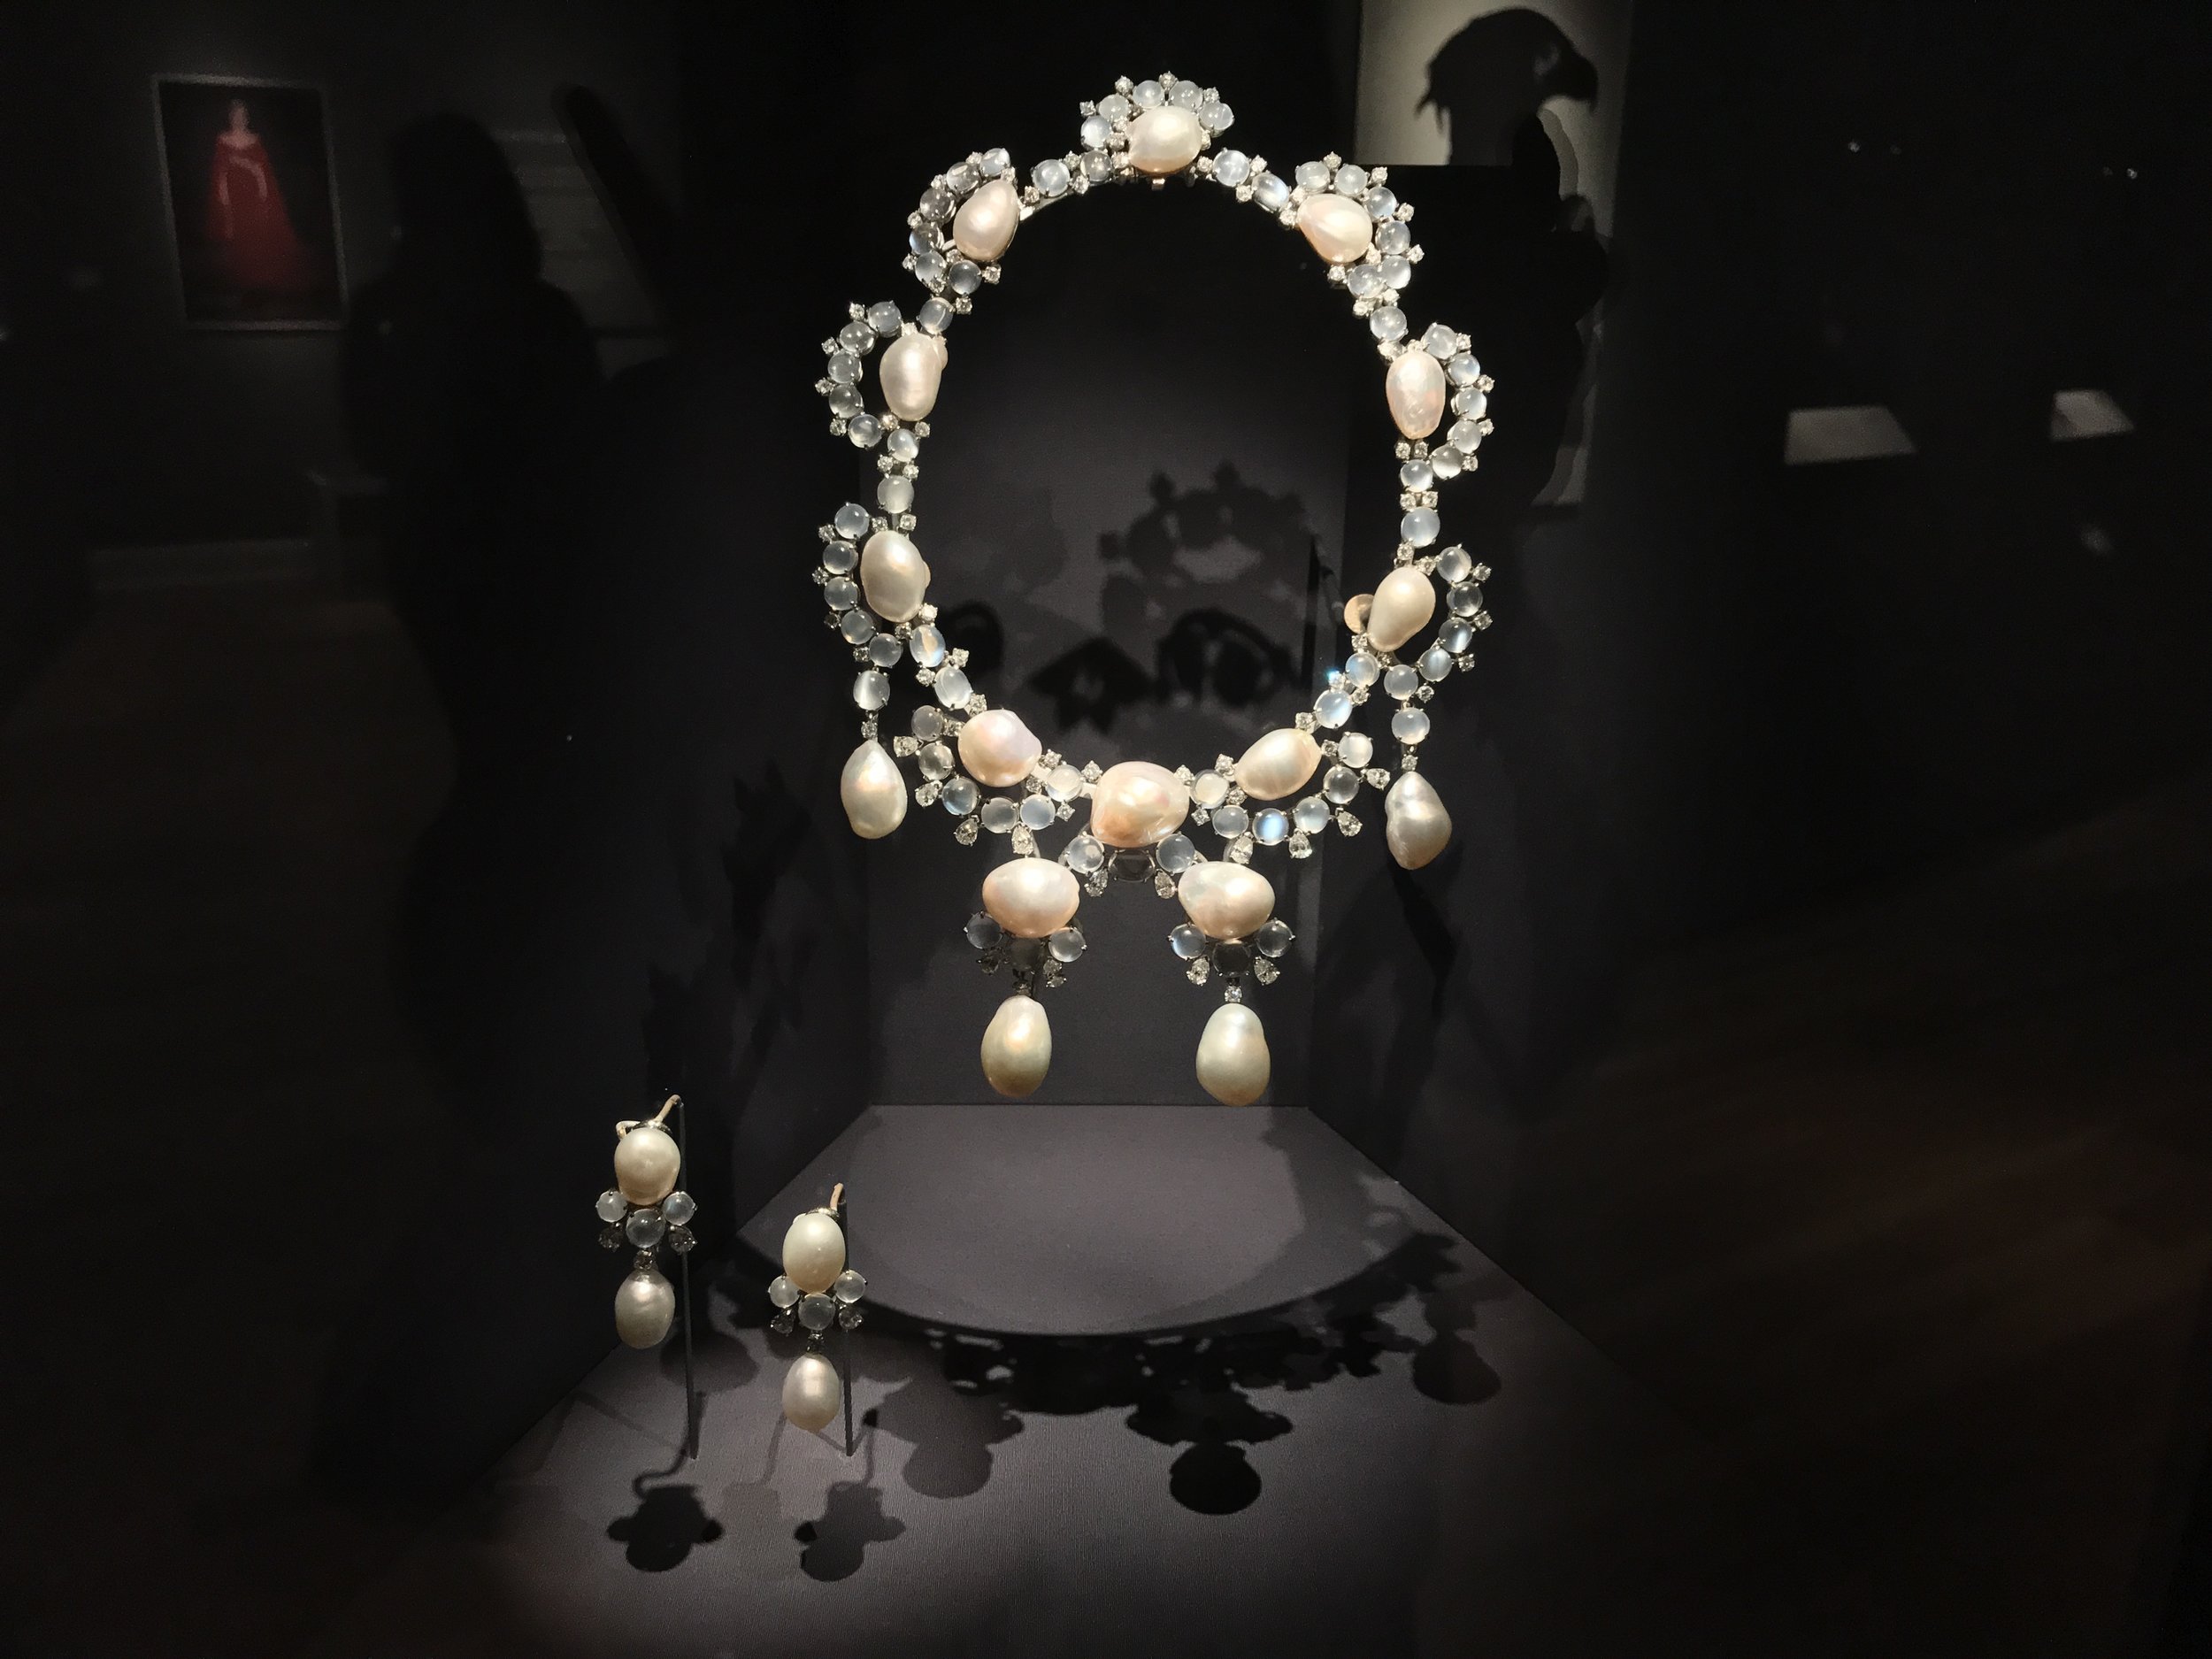 Burmese pearls, diamonds and moonstones